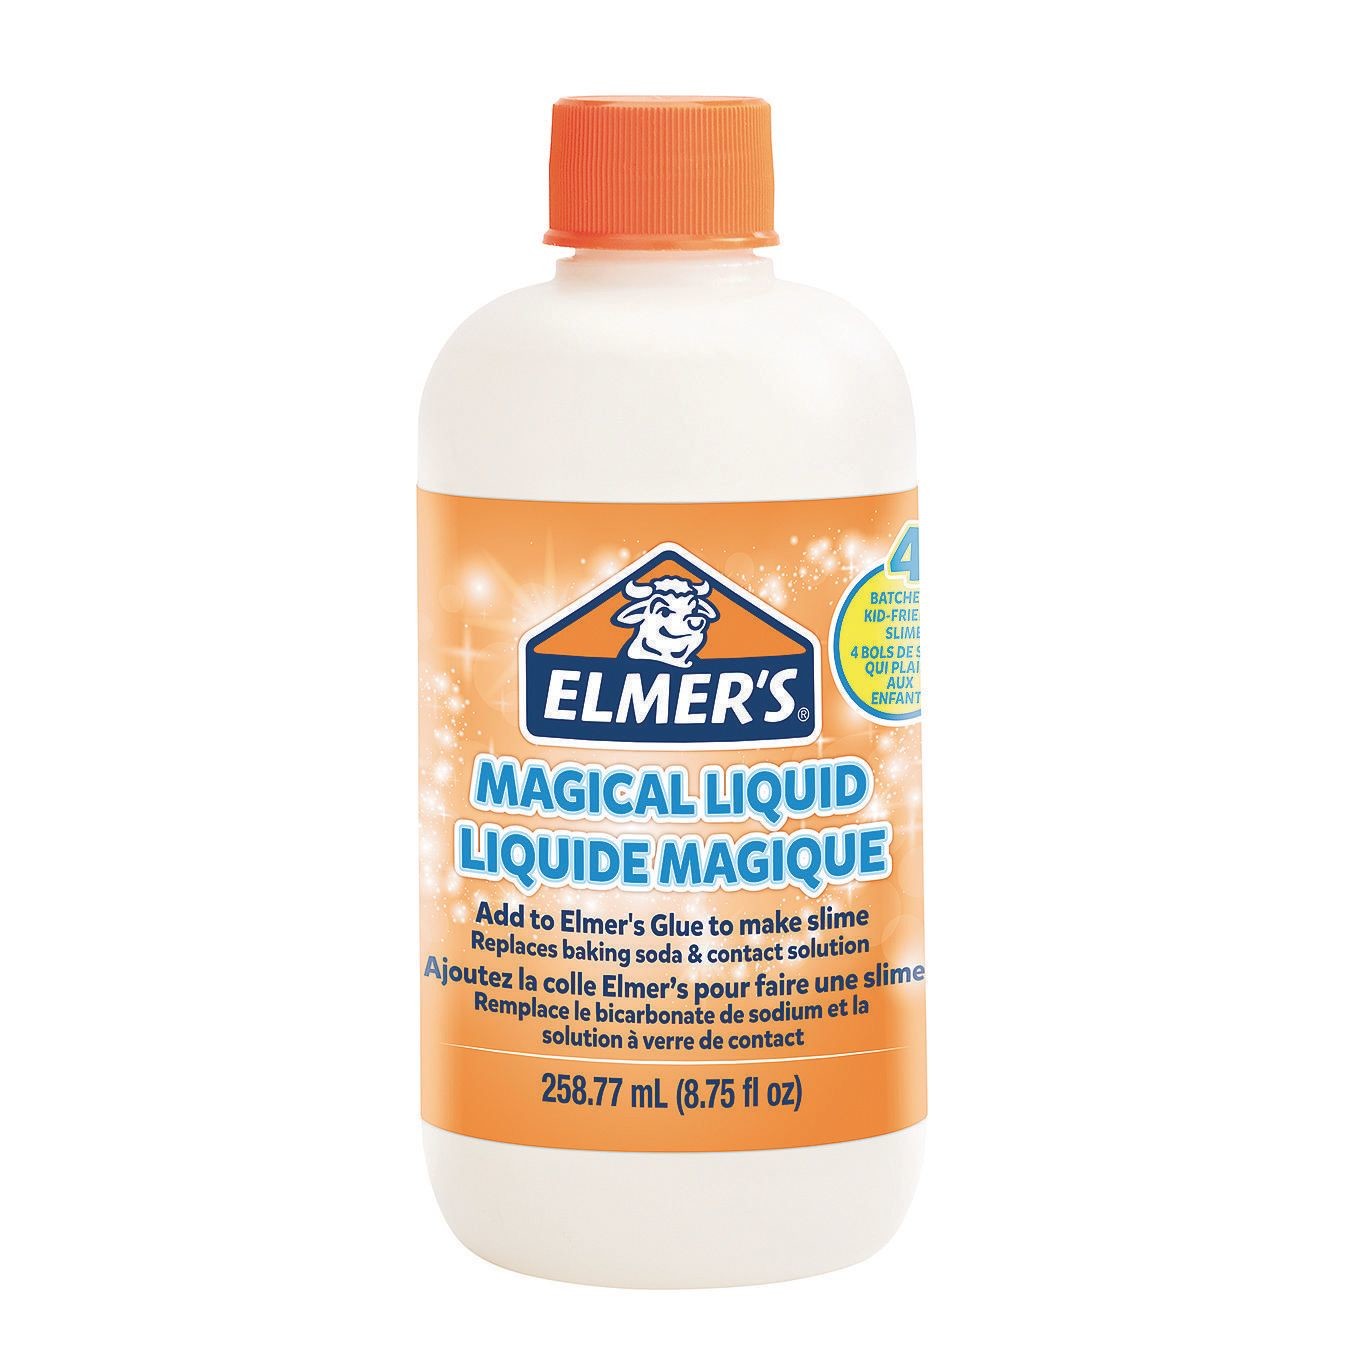 Making Slime with Elmer's Magical Liquid! 